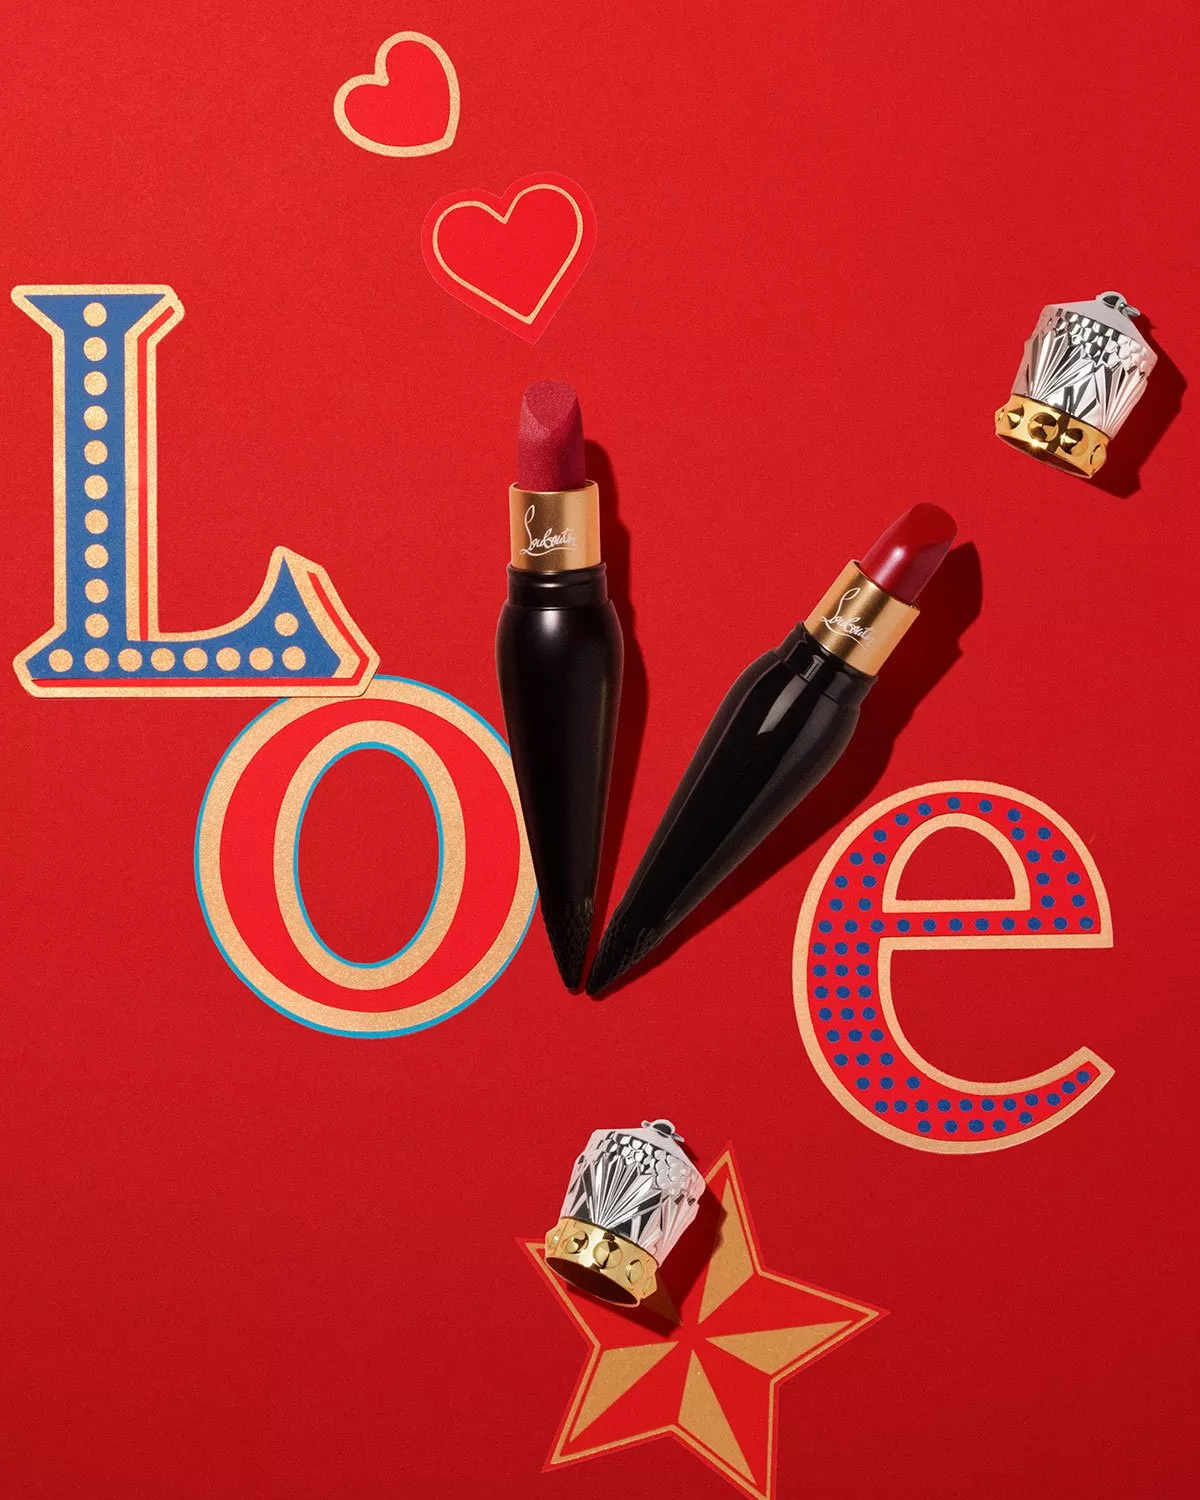 Christian Louboutin تقدم تصاميم جديدة من مجموعتي Louboutin وLove الخاصة بعيد الحب 2022